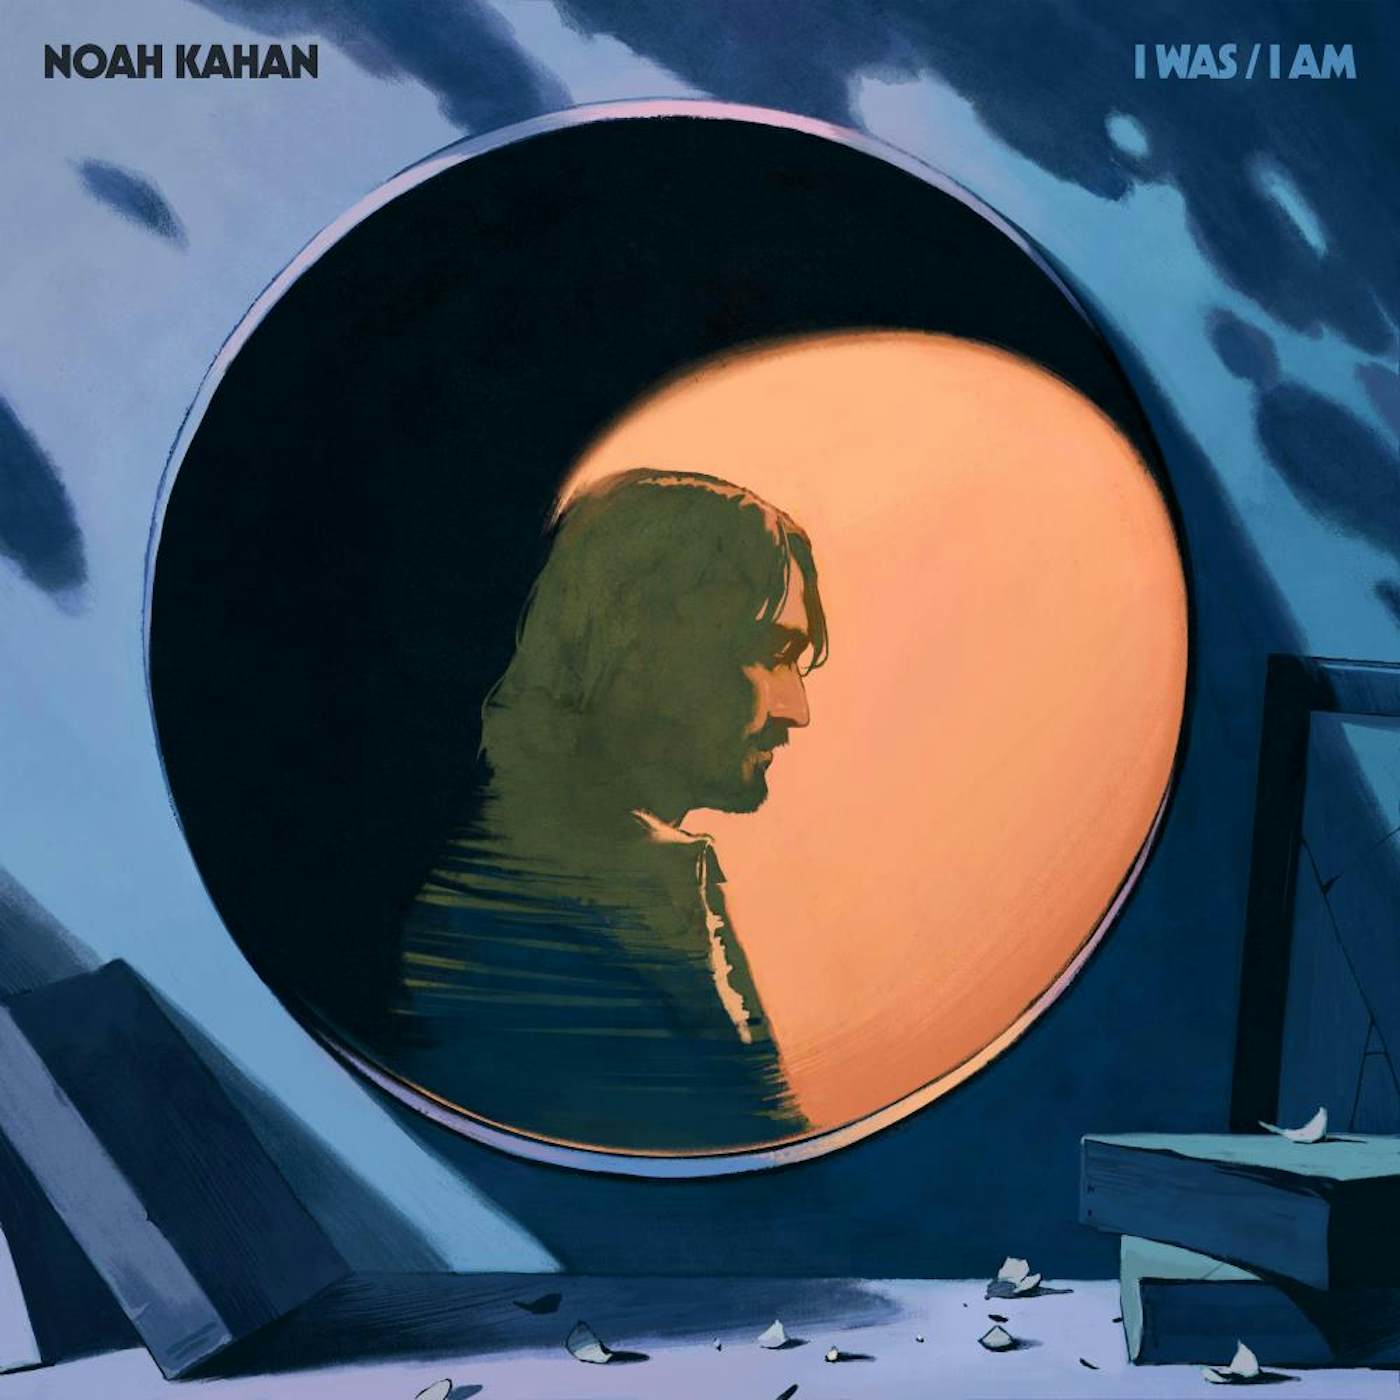 NOAH KAHAN Stick Season Vinyl LP Record Album [IN HAND, SHIPS NOW